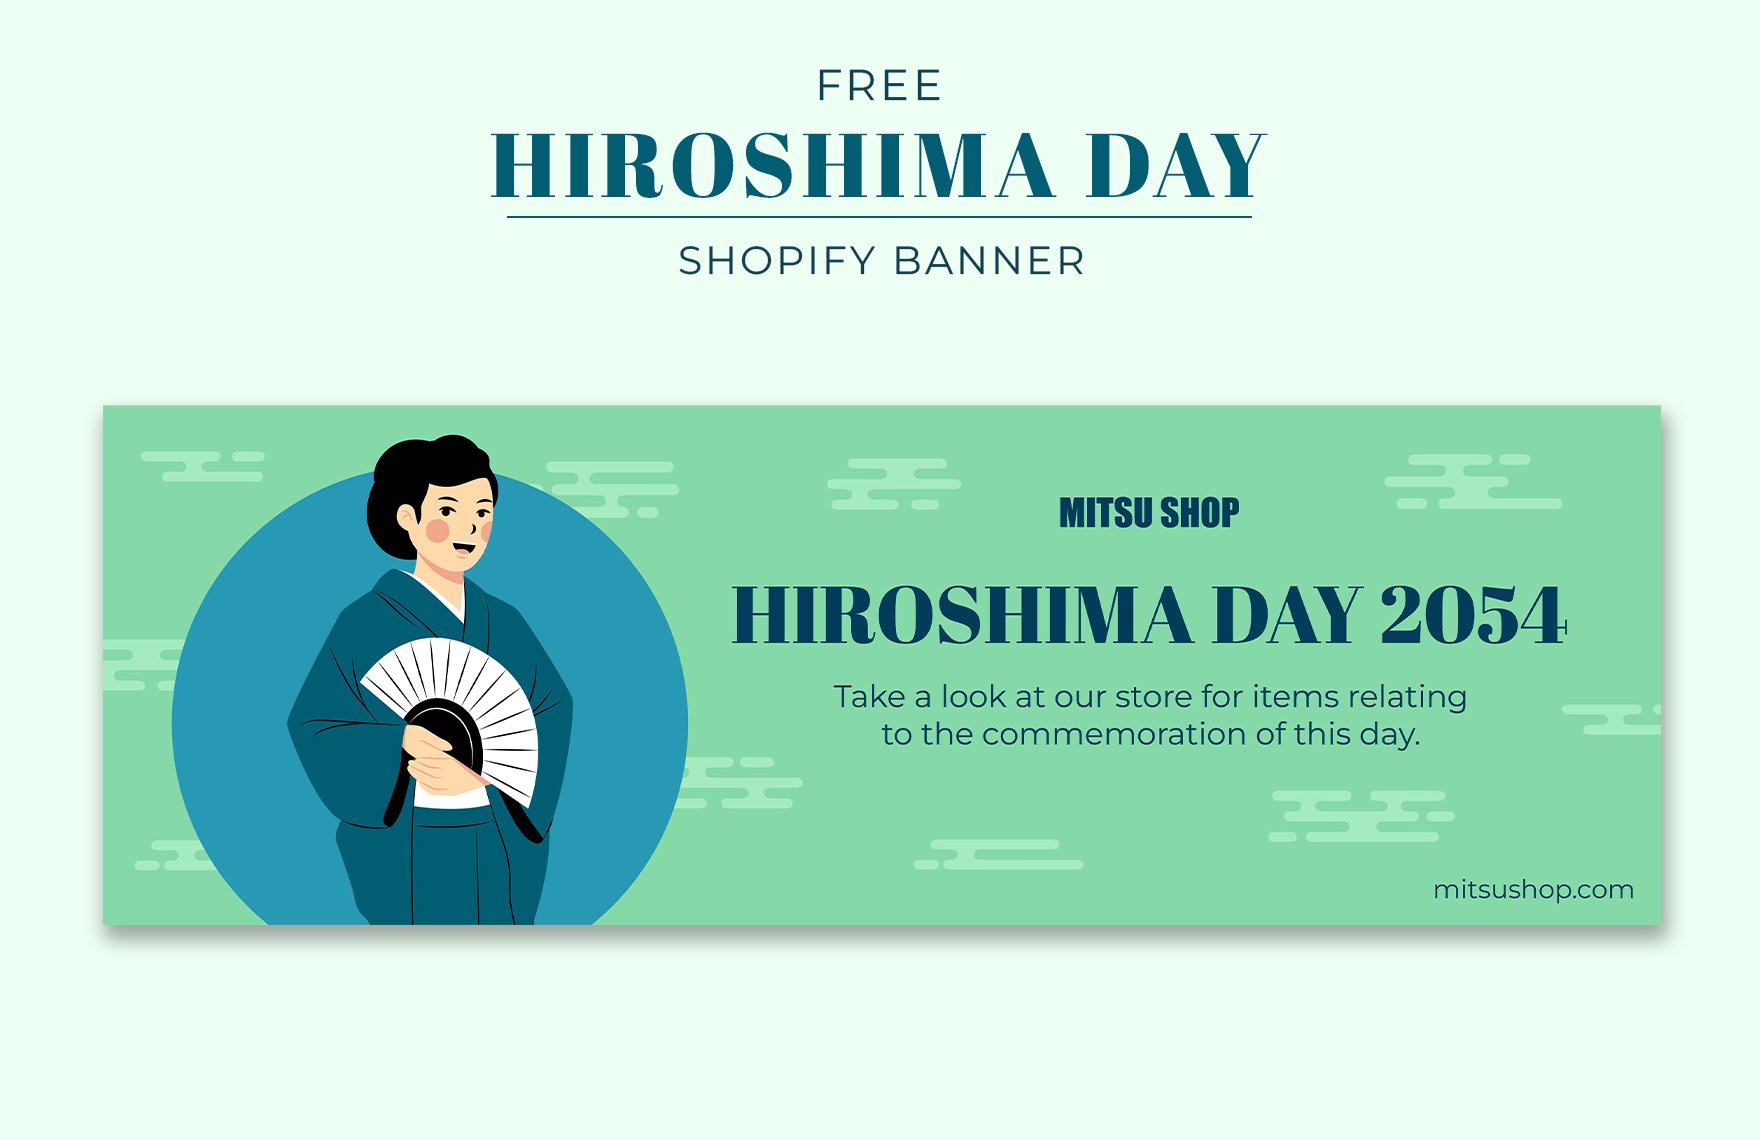 Free Hiroshima Day Shopify Banner in PDF, Illustrator, SVG, JPG